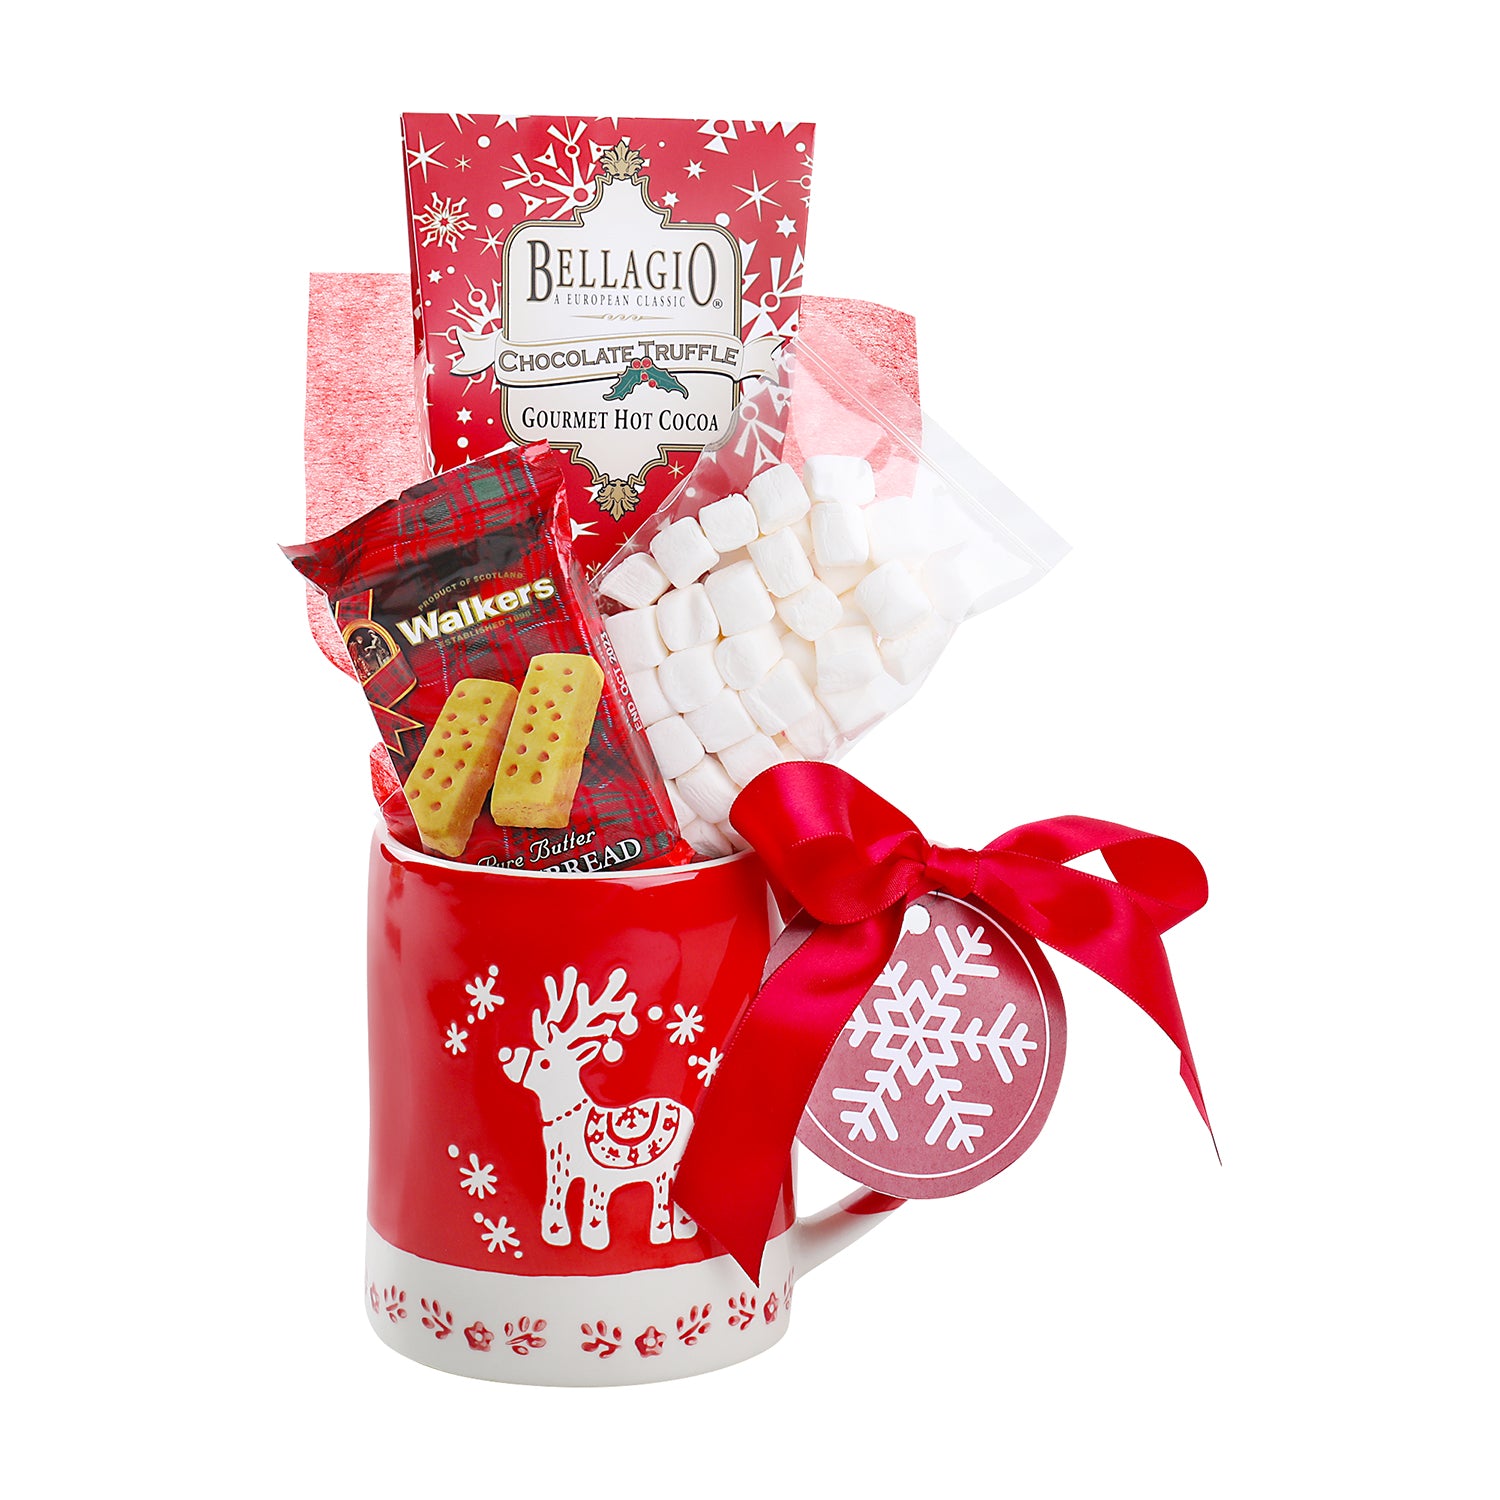 Ceramic Mug with Reindeer, Bellagio Chocolate Truffle Cocoa (1oz), Marshmallow Bag (1oz), Walkers  Shortbread Fingers (1.0oz), 